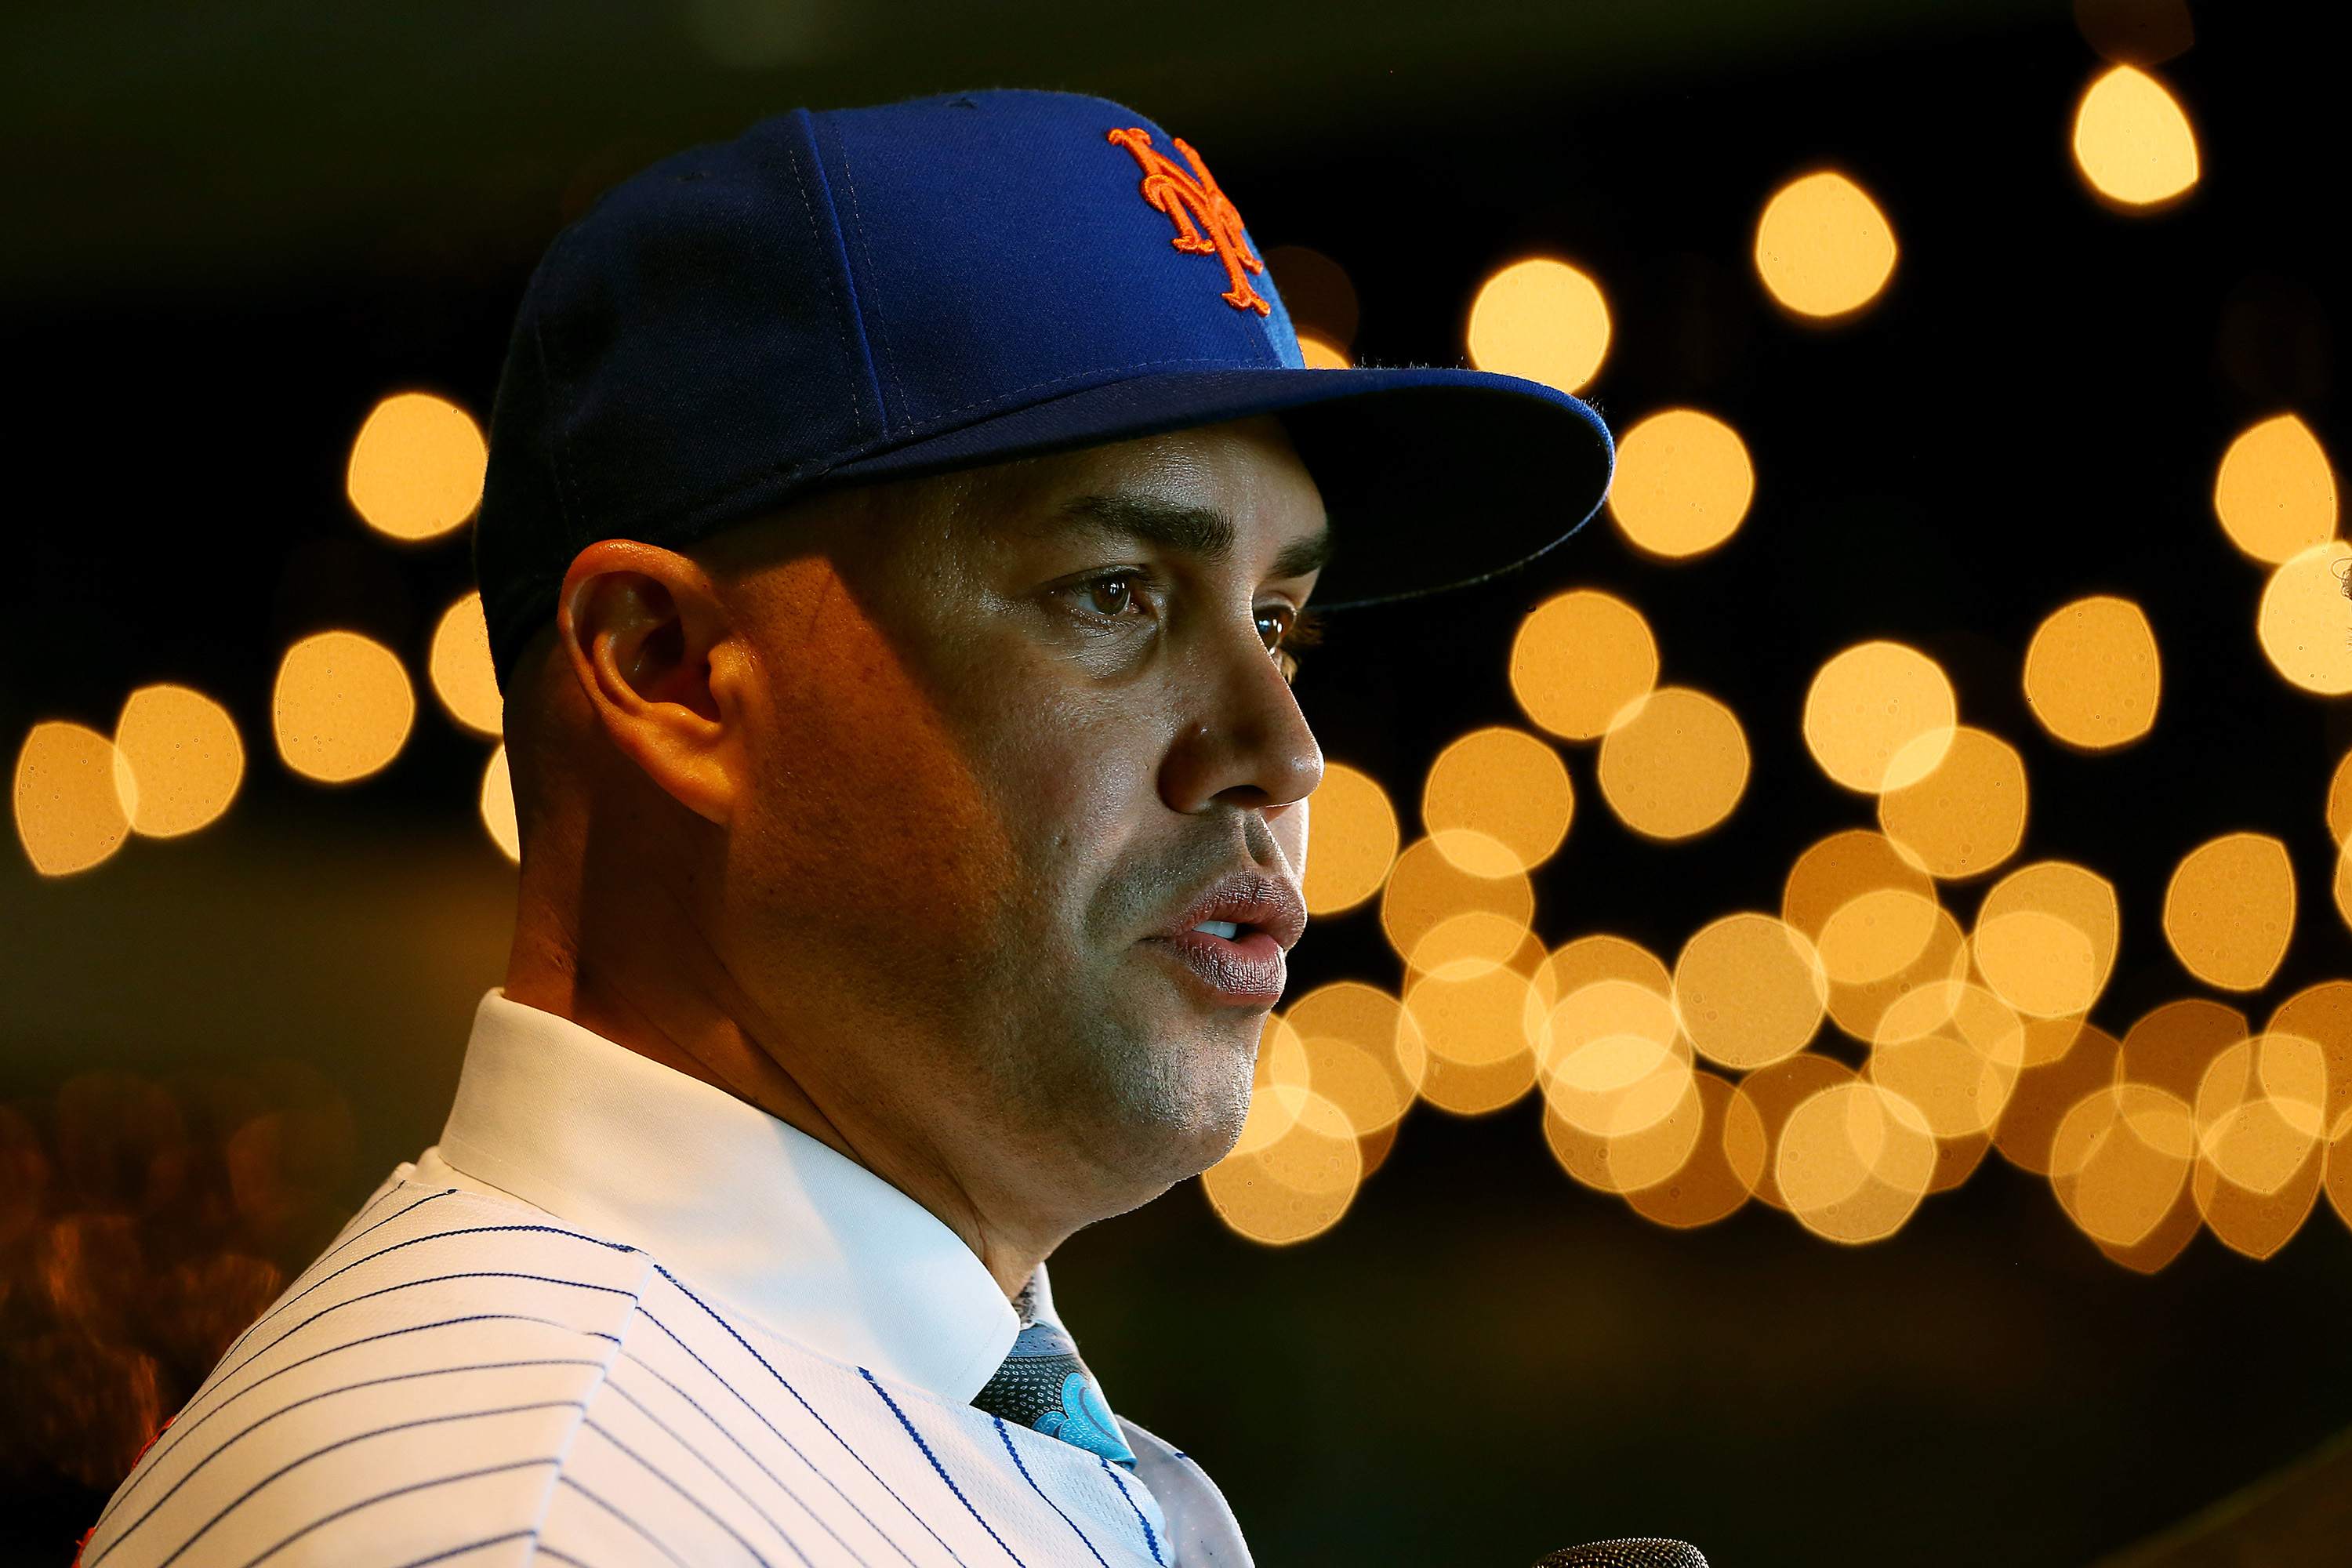 Carlos Beltran admits Astros cheated: 'We were wrong